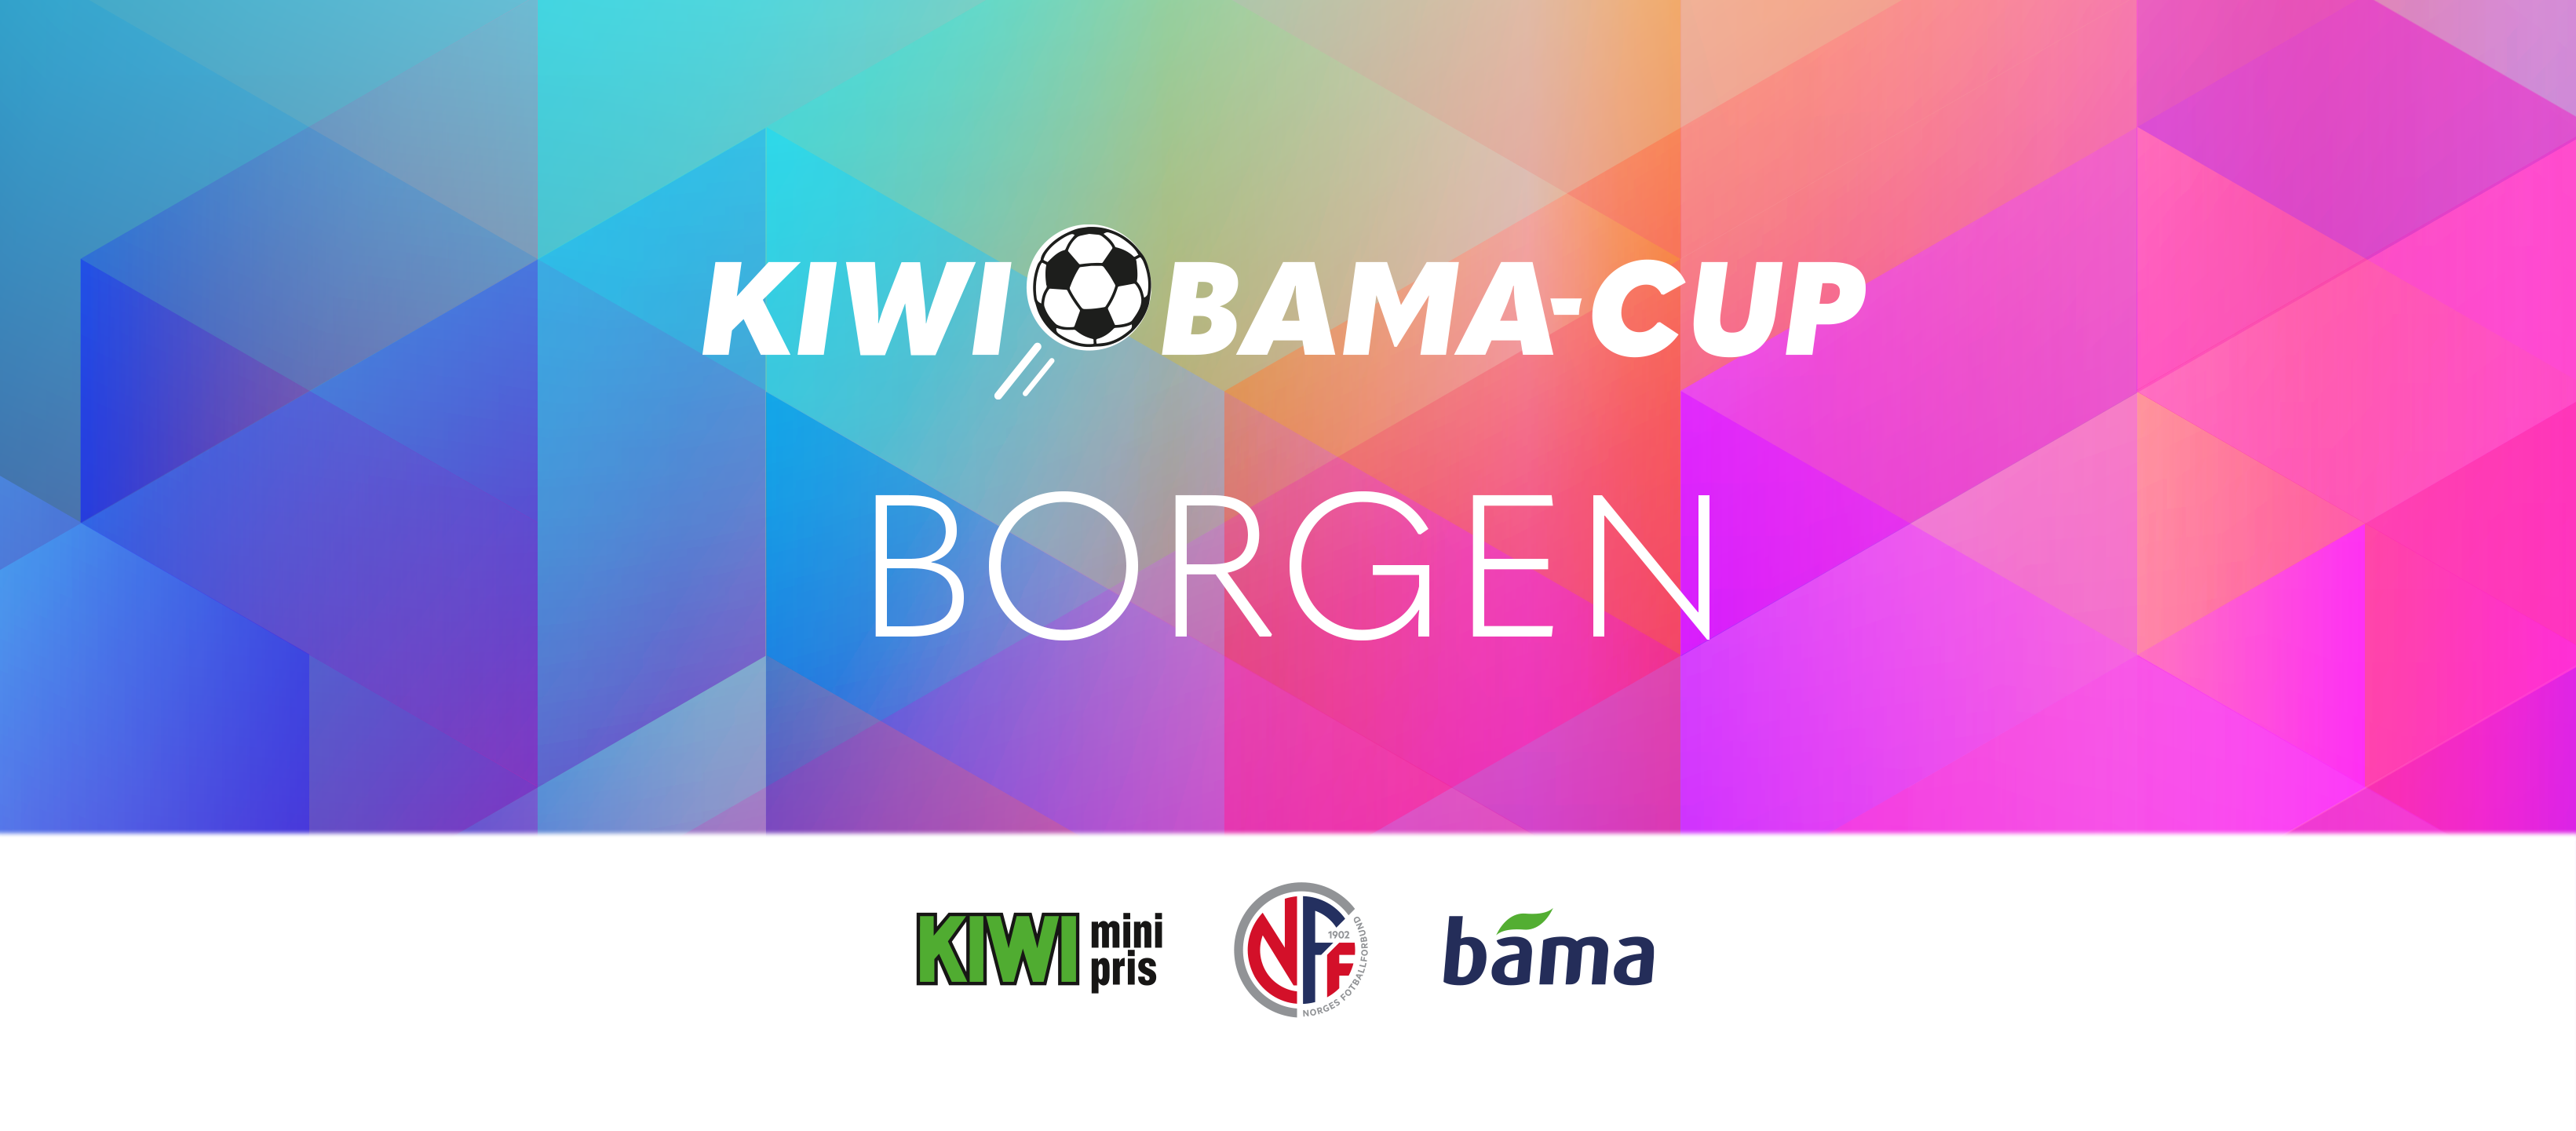 FB-BANNER KIWI-BAMA-Cup - Borgen.png